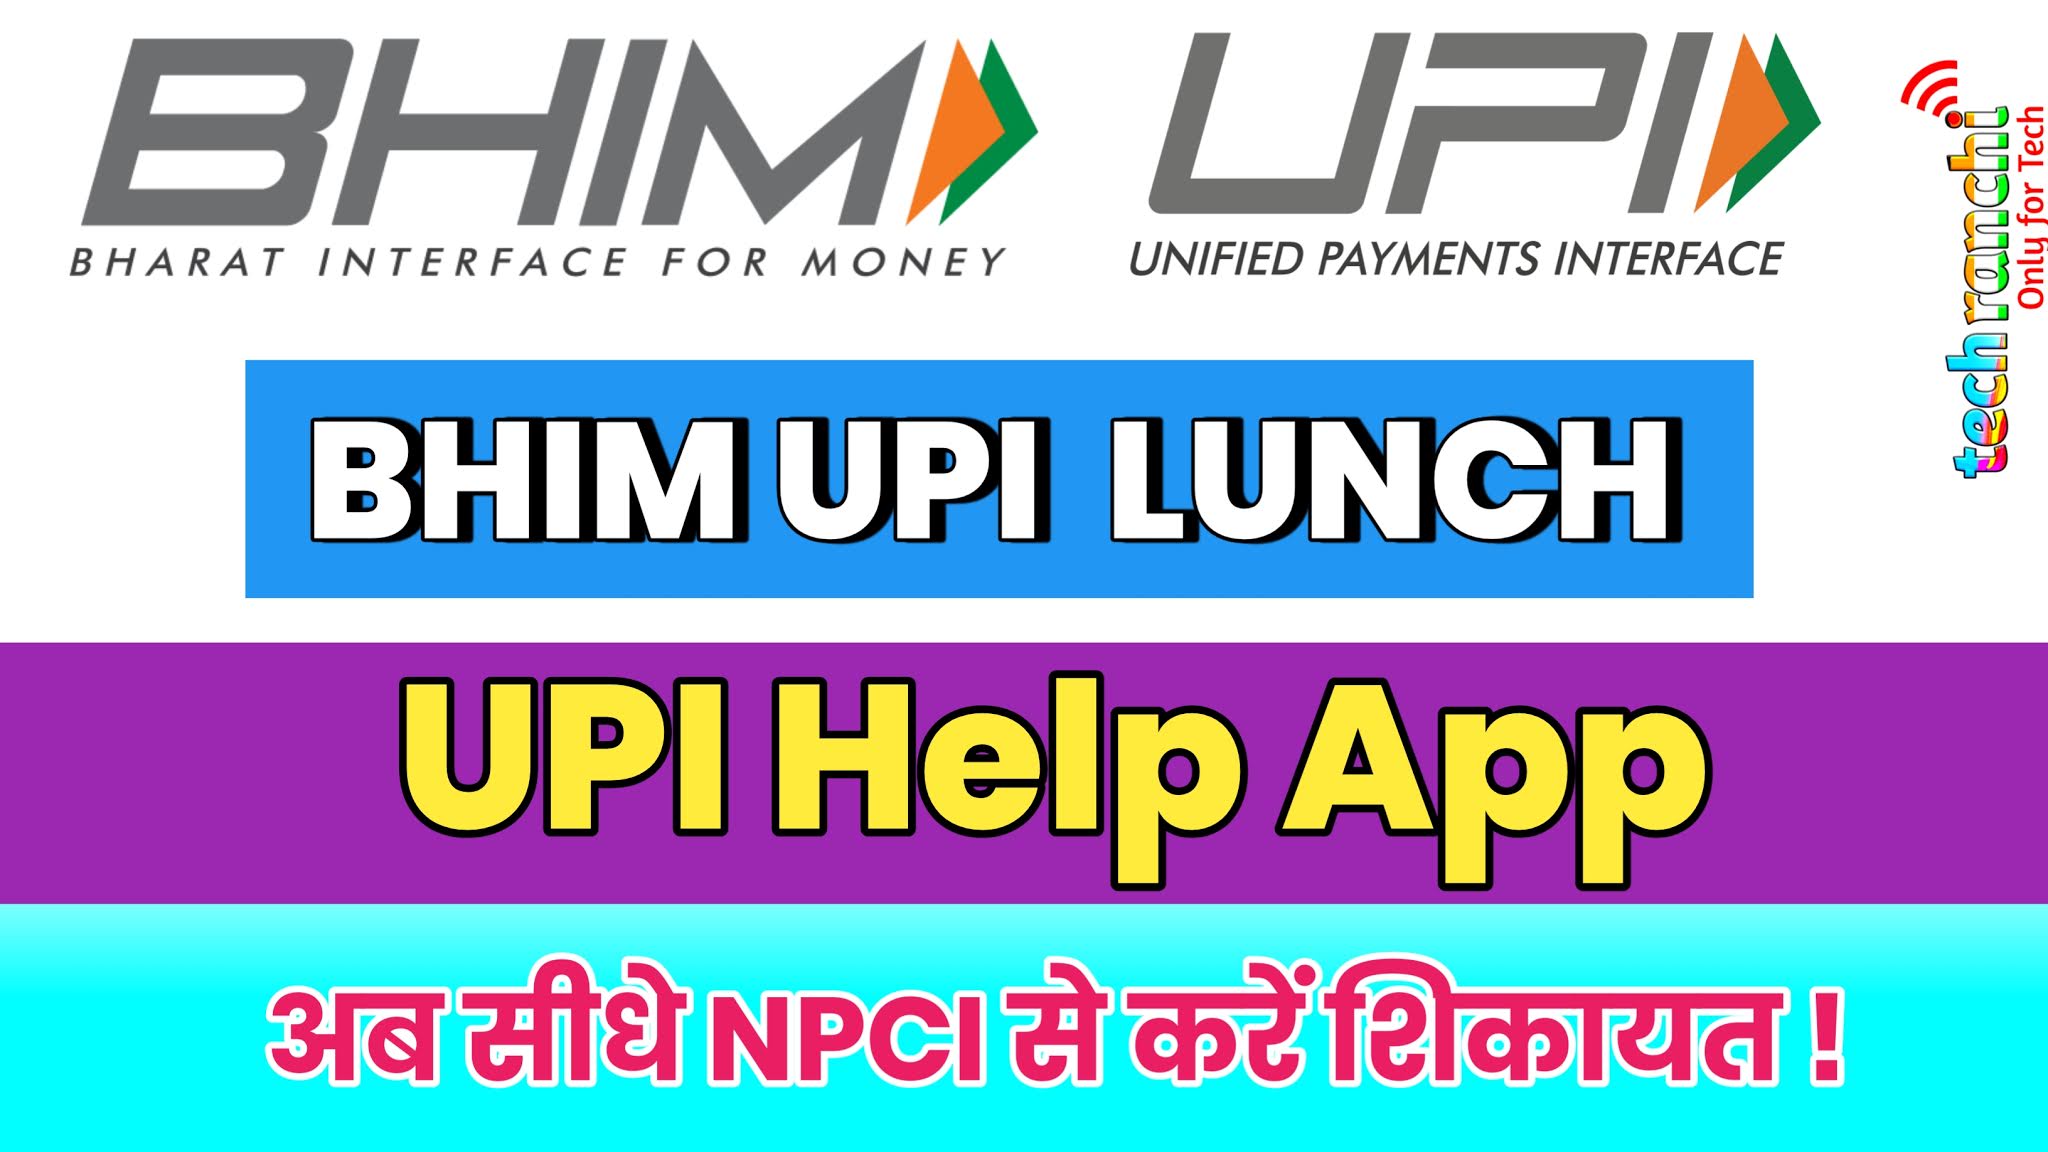 BHIM UPI Lunchs UPI Help App | Ab NPCI Pr Complaint Kr Sakte Hi